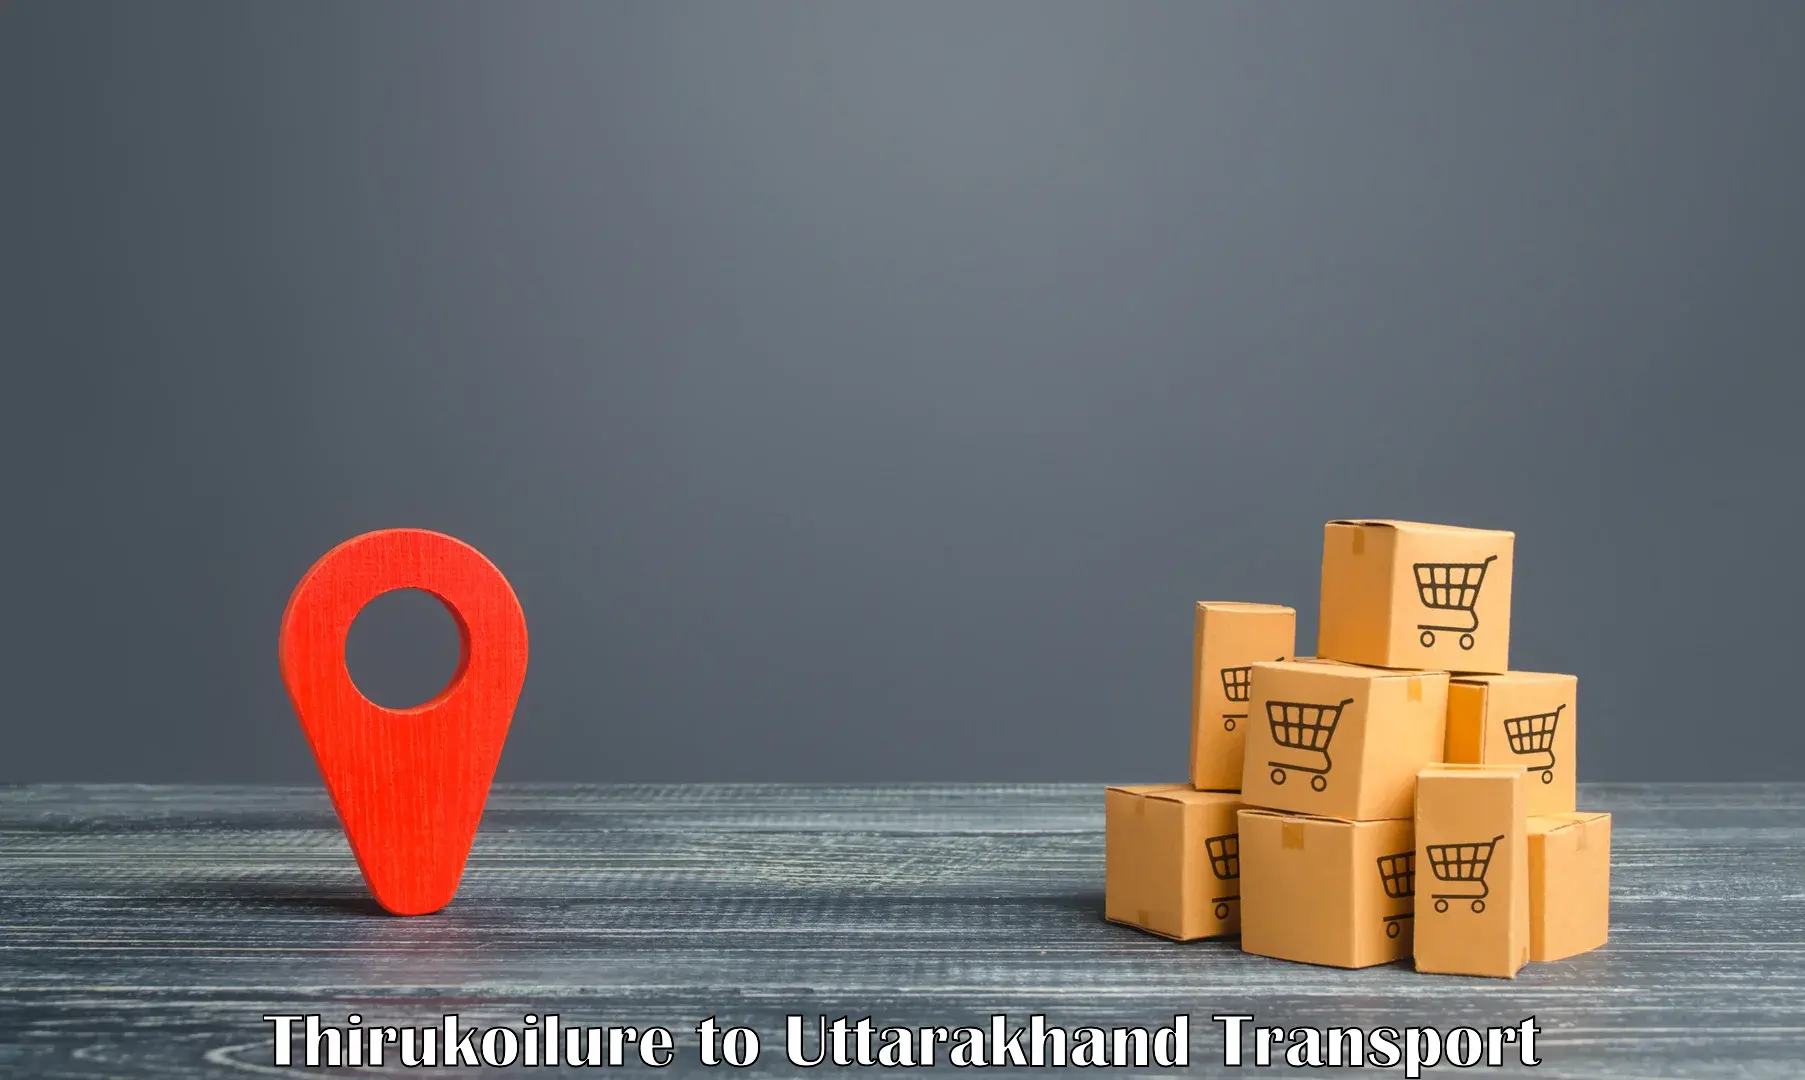 Shipping services Thirukoilure to Uttarakhand